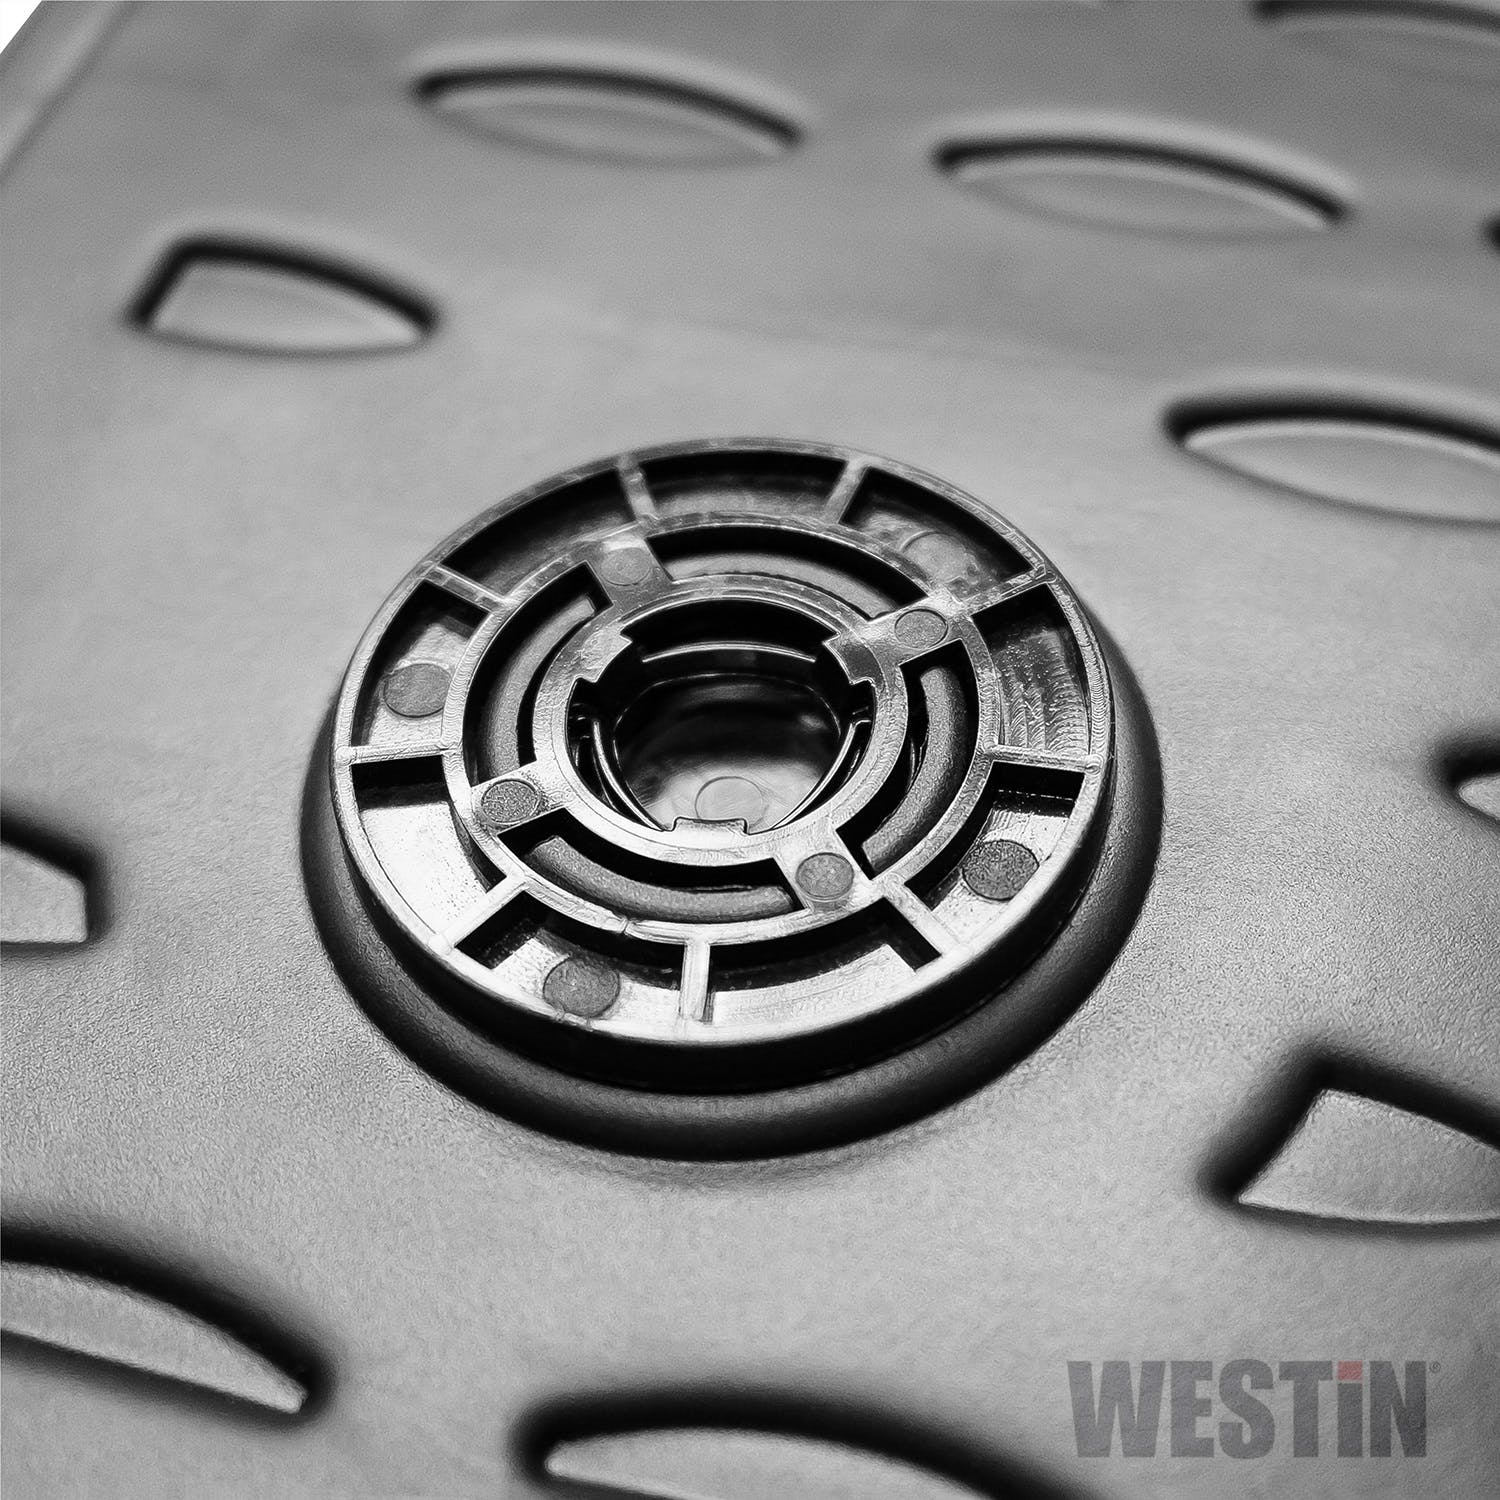 Westin Automotive 74-41-21012 Profile Floor Liners Front Row Black